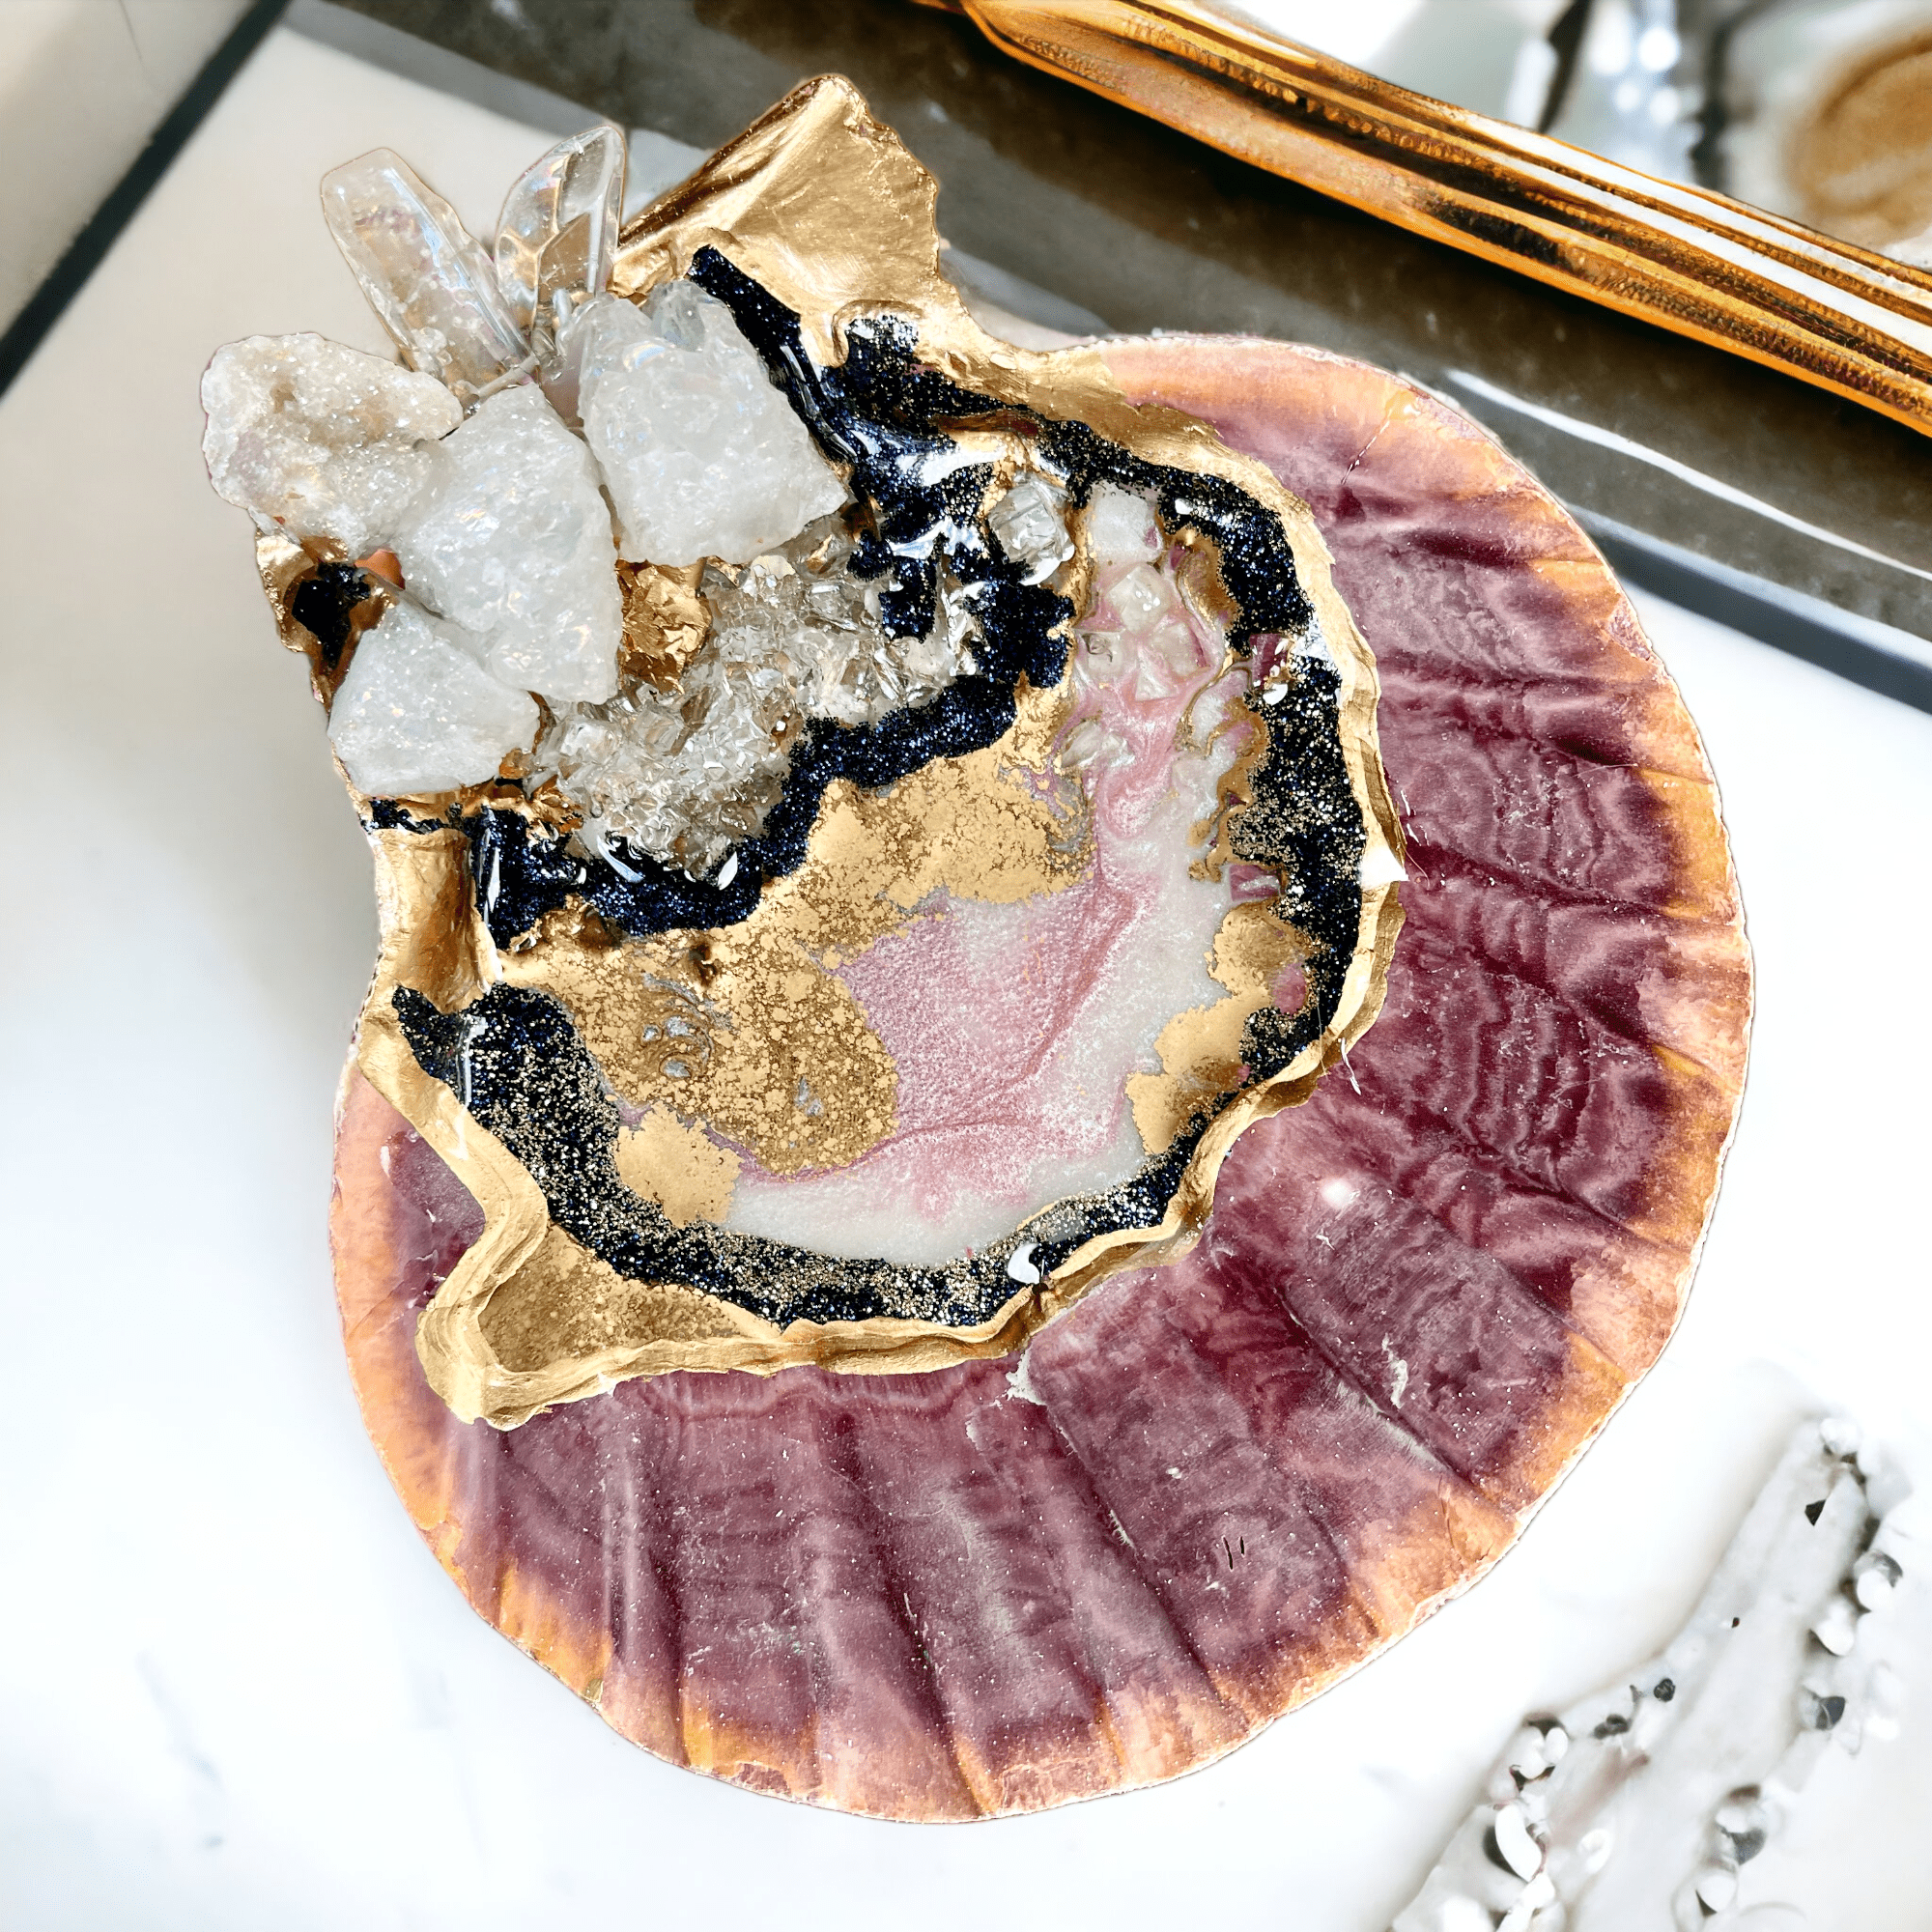 XL Lion's Paw Geode Resin Ring Dish - White Druzy, Clear Quartz & Pink - Pretty Crafty Lady Shop